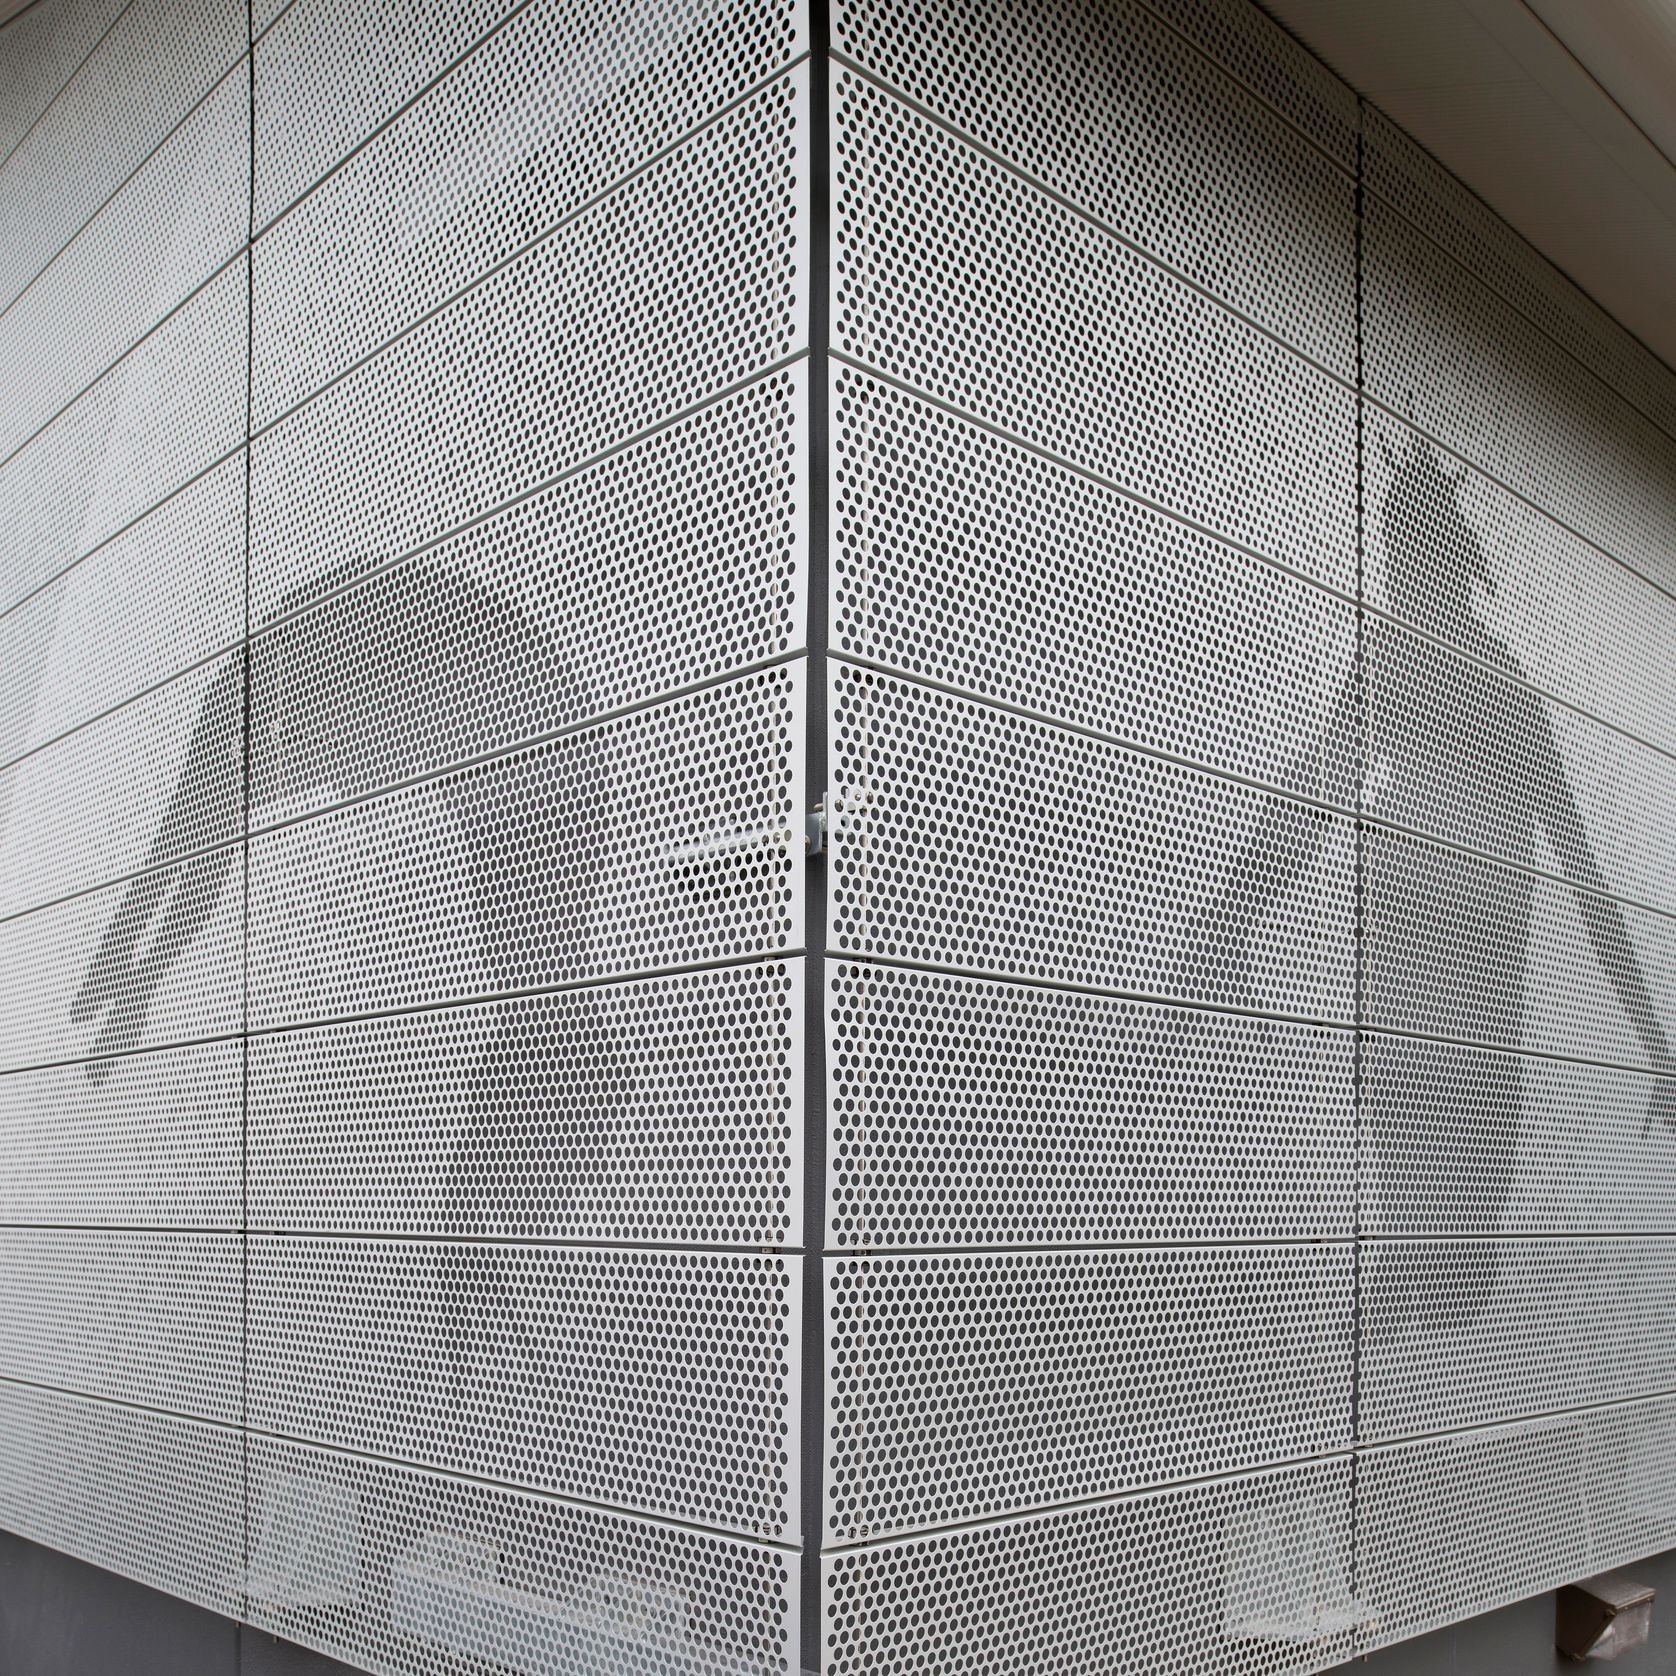 Pic Perf Perforated Metal gallery detail image